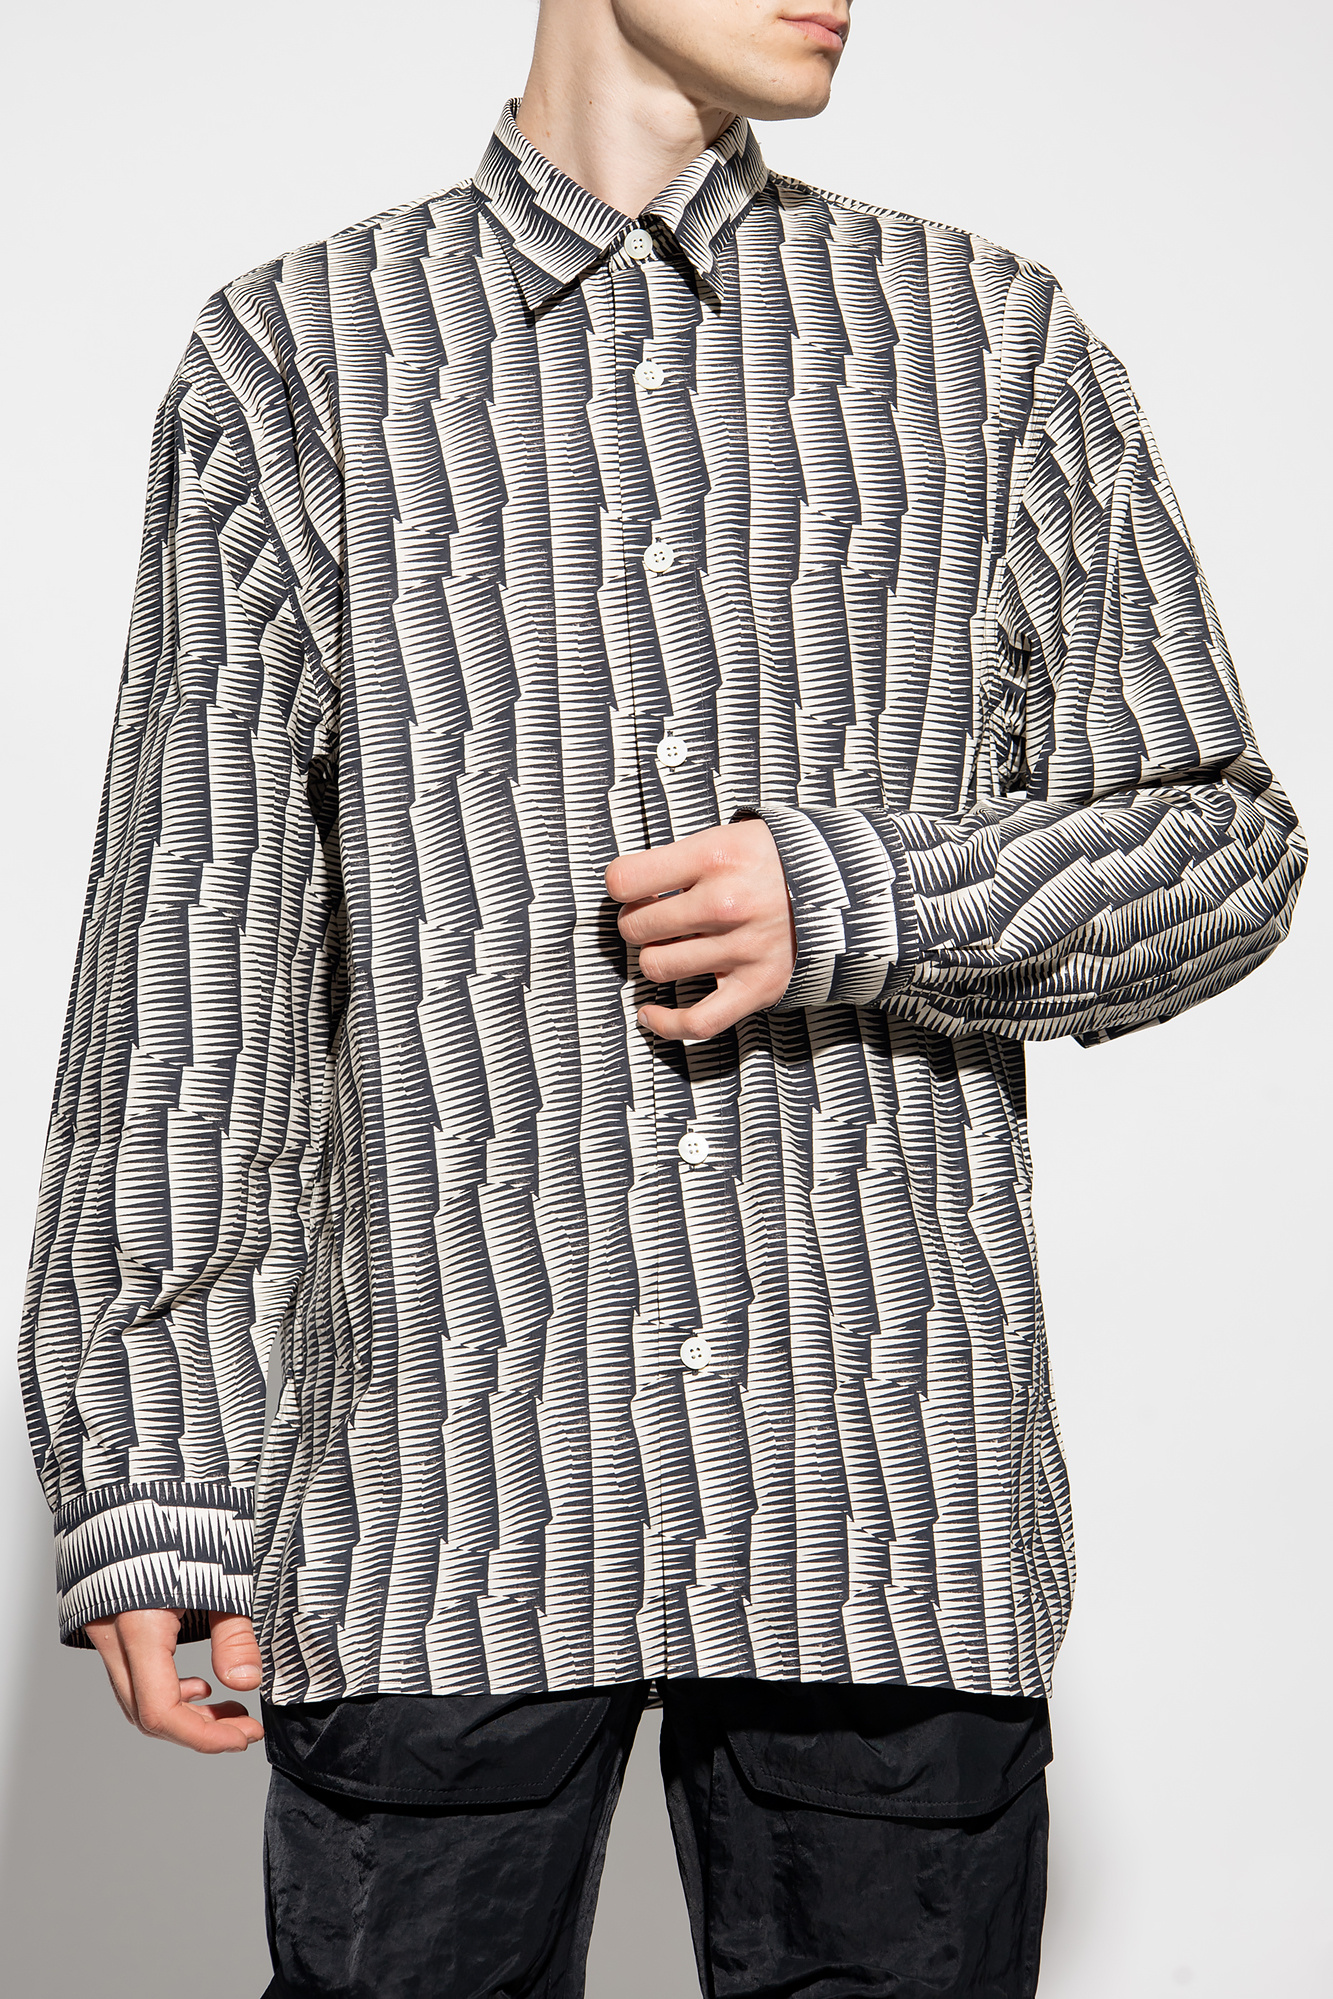 Dries Van Noten Shirt with geometrical pattern | Men's Clothing